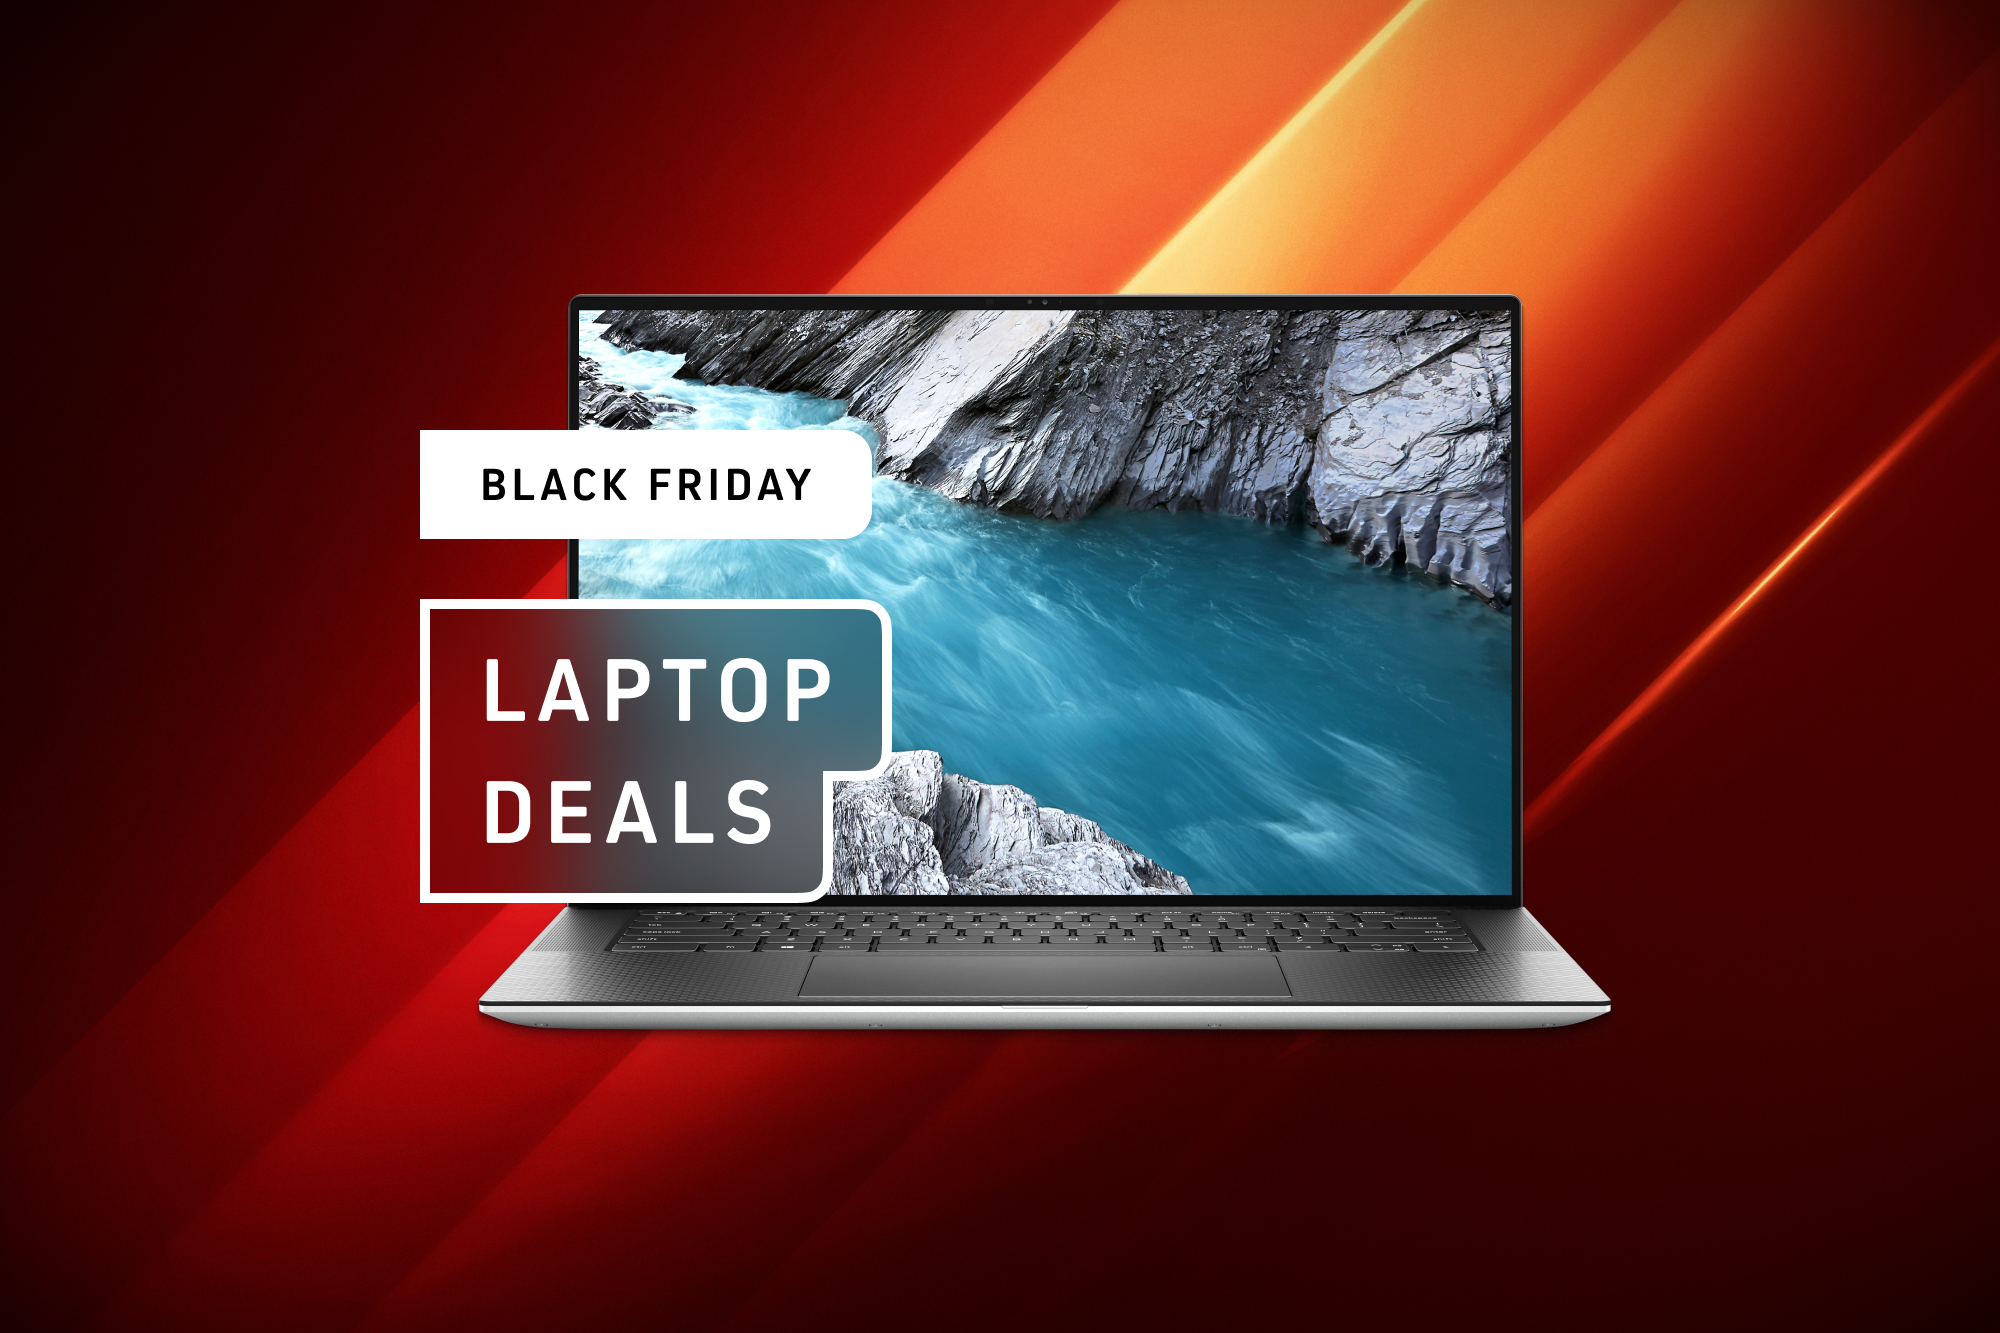 eindeloos een keer regisseur The best Black Friday laptop deals for 2022 | Digital Trends